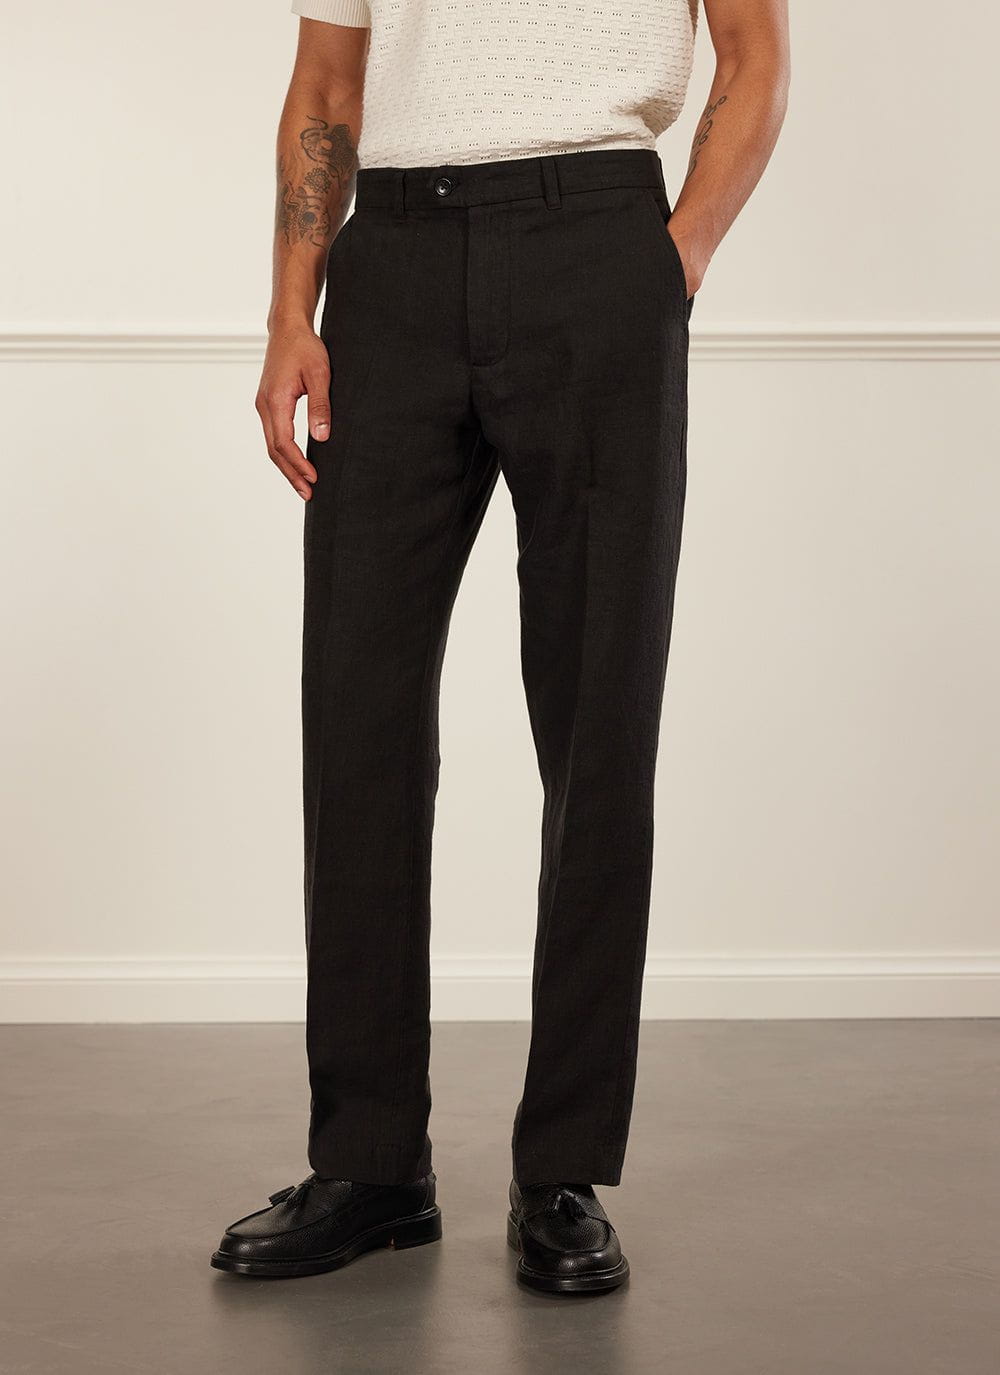 Workwear Basics Black Tailored Trouser